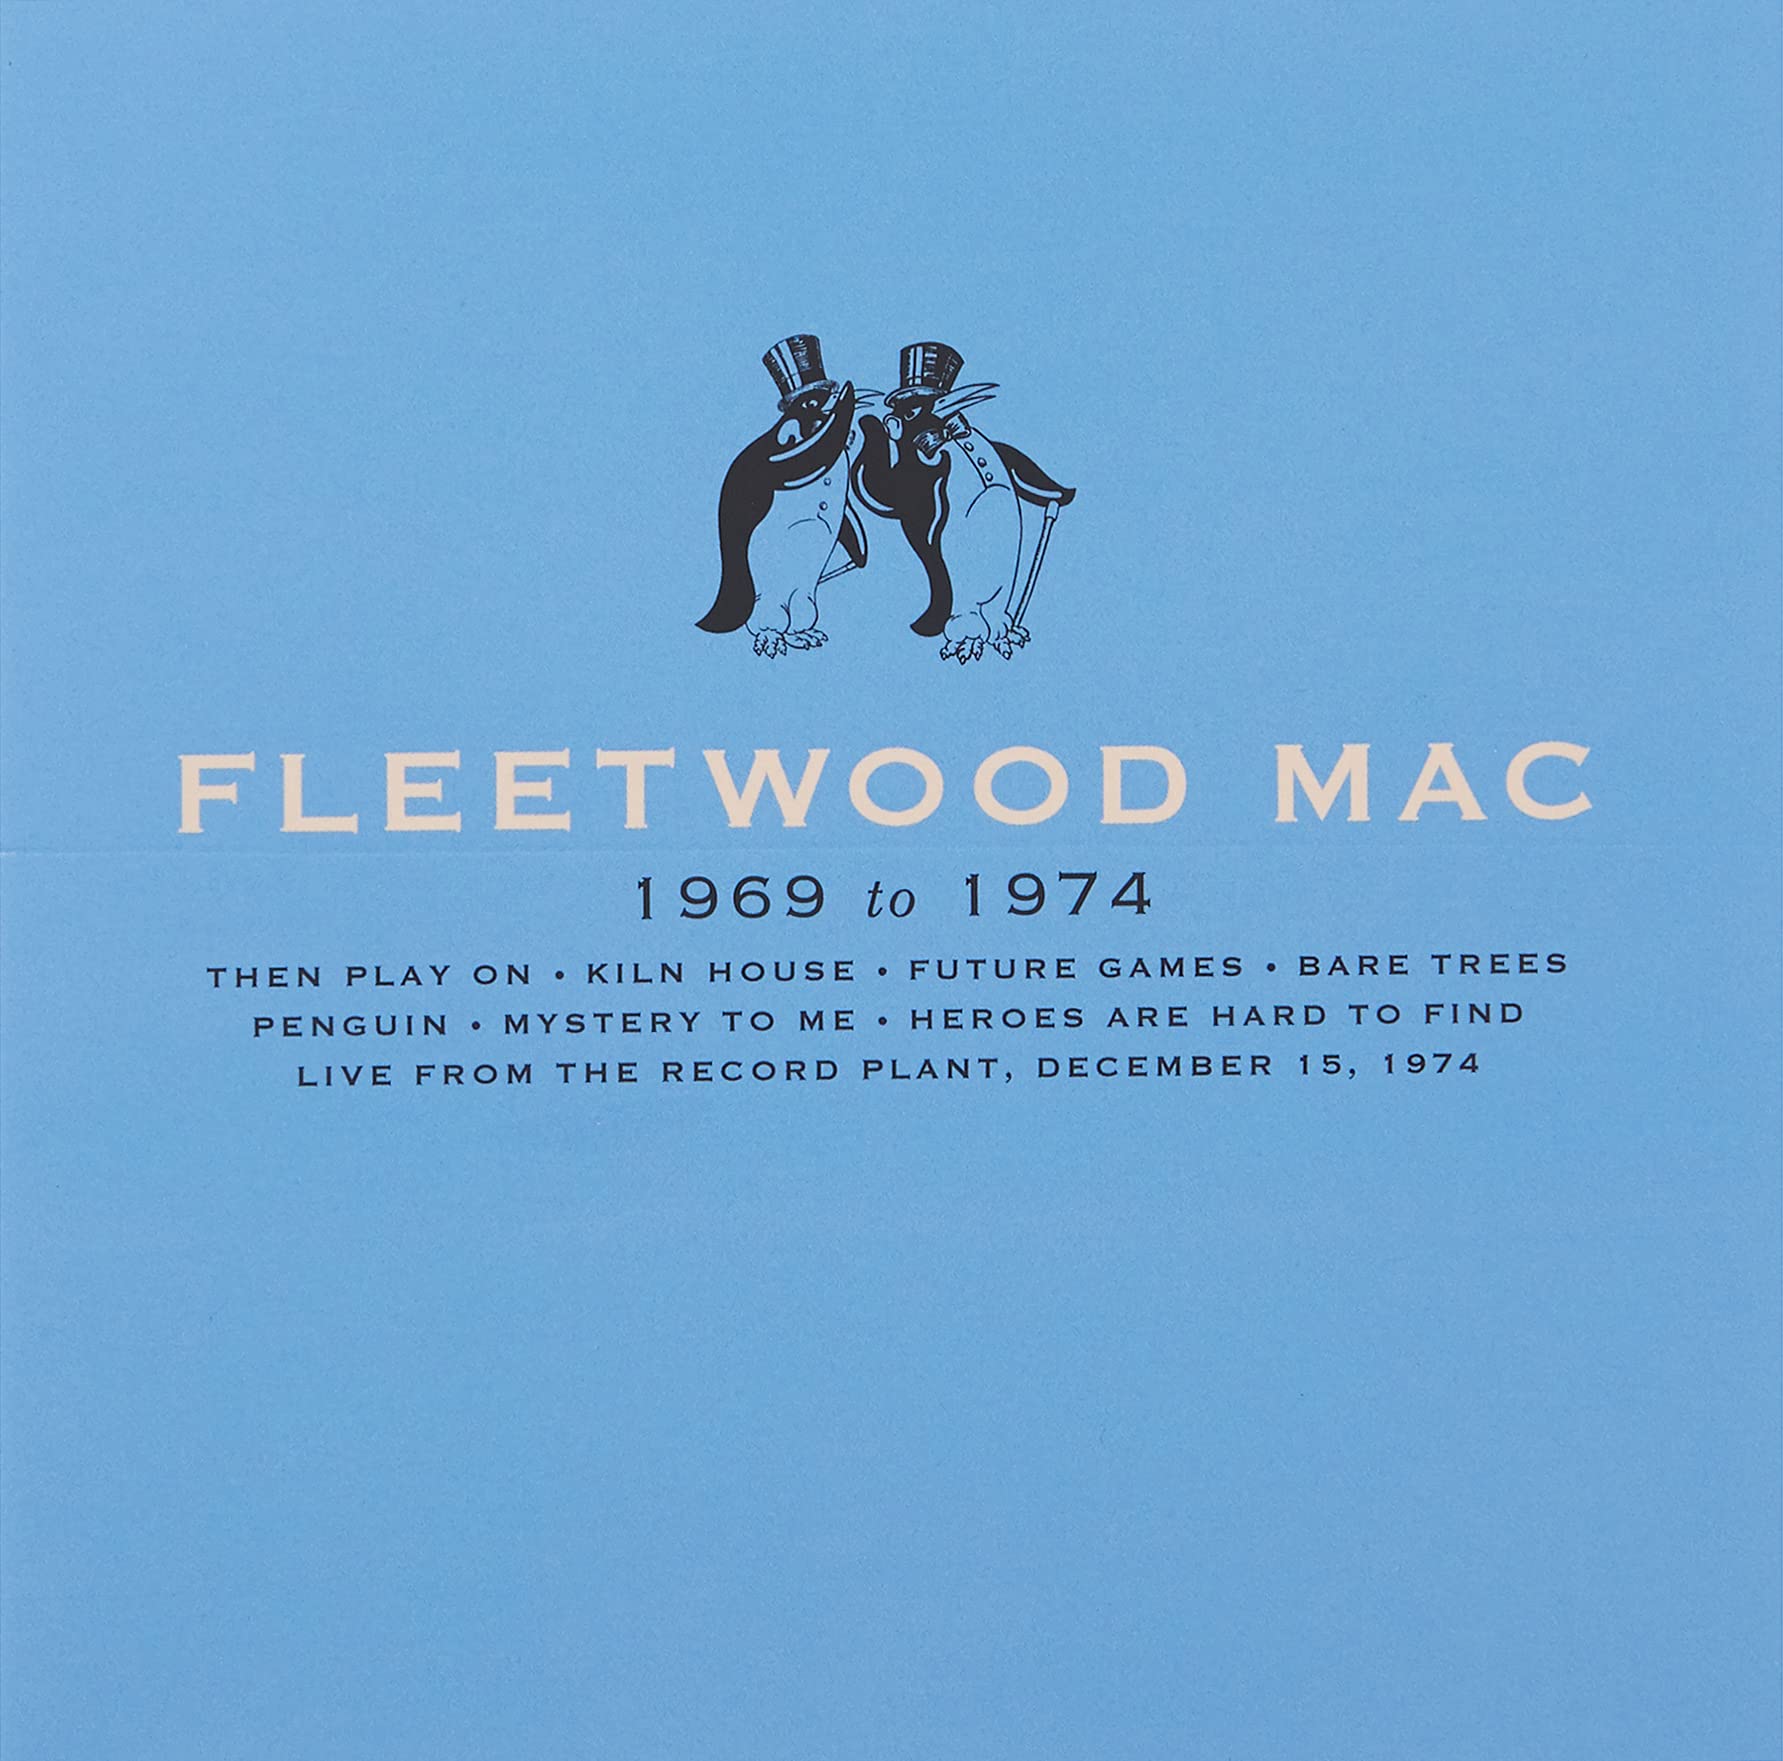 Fleetwood Mac - 1969 to 1974 (R2 596006, 8CD REMASTERED BOXSET) (2020) FLAC Download